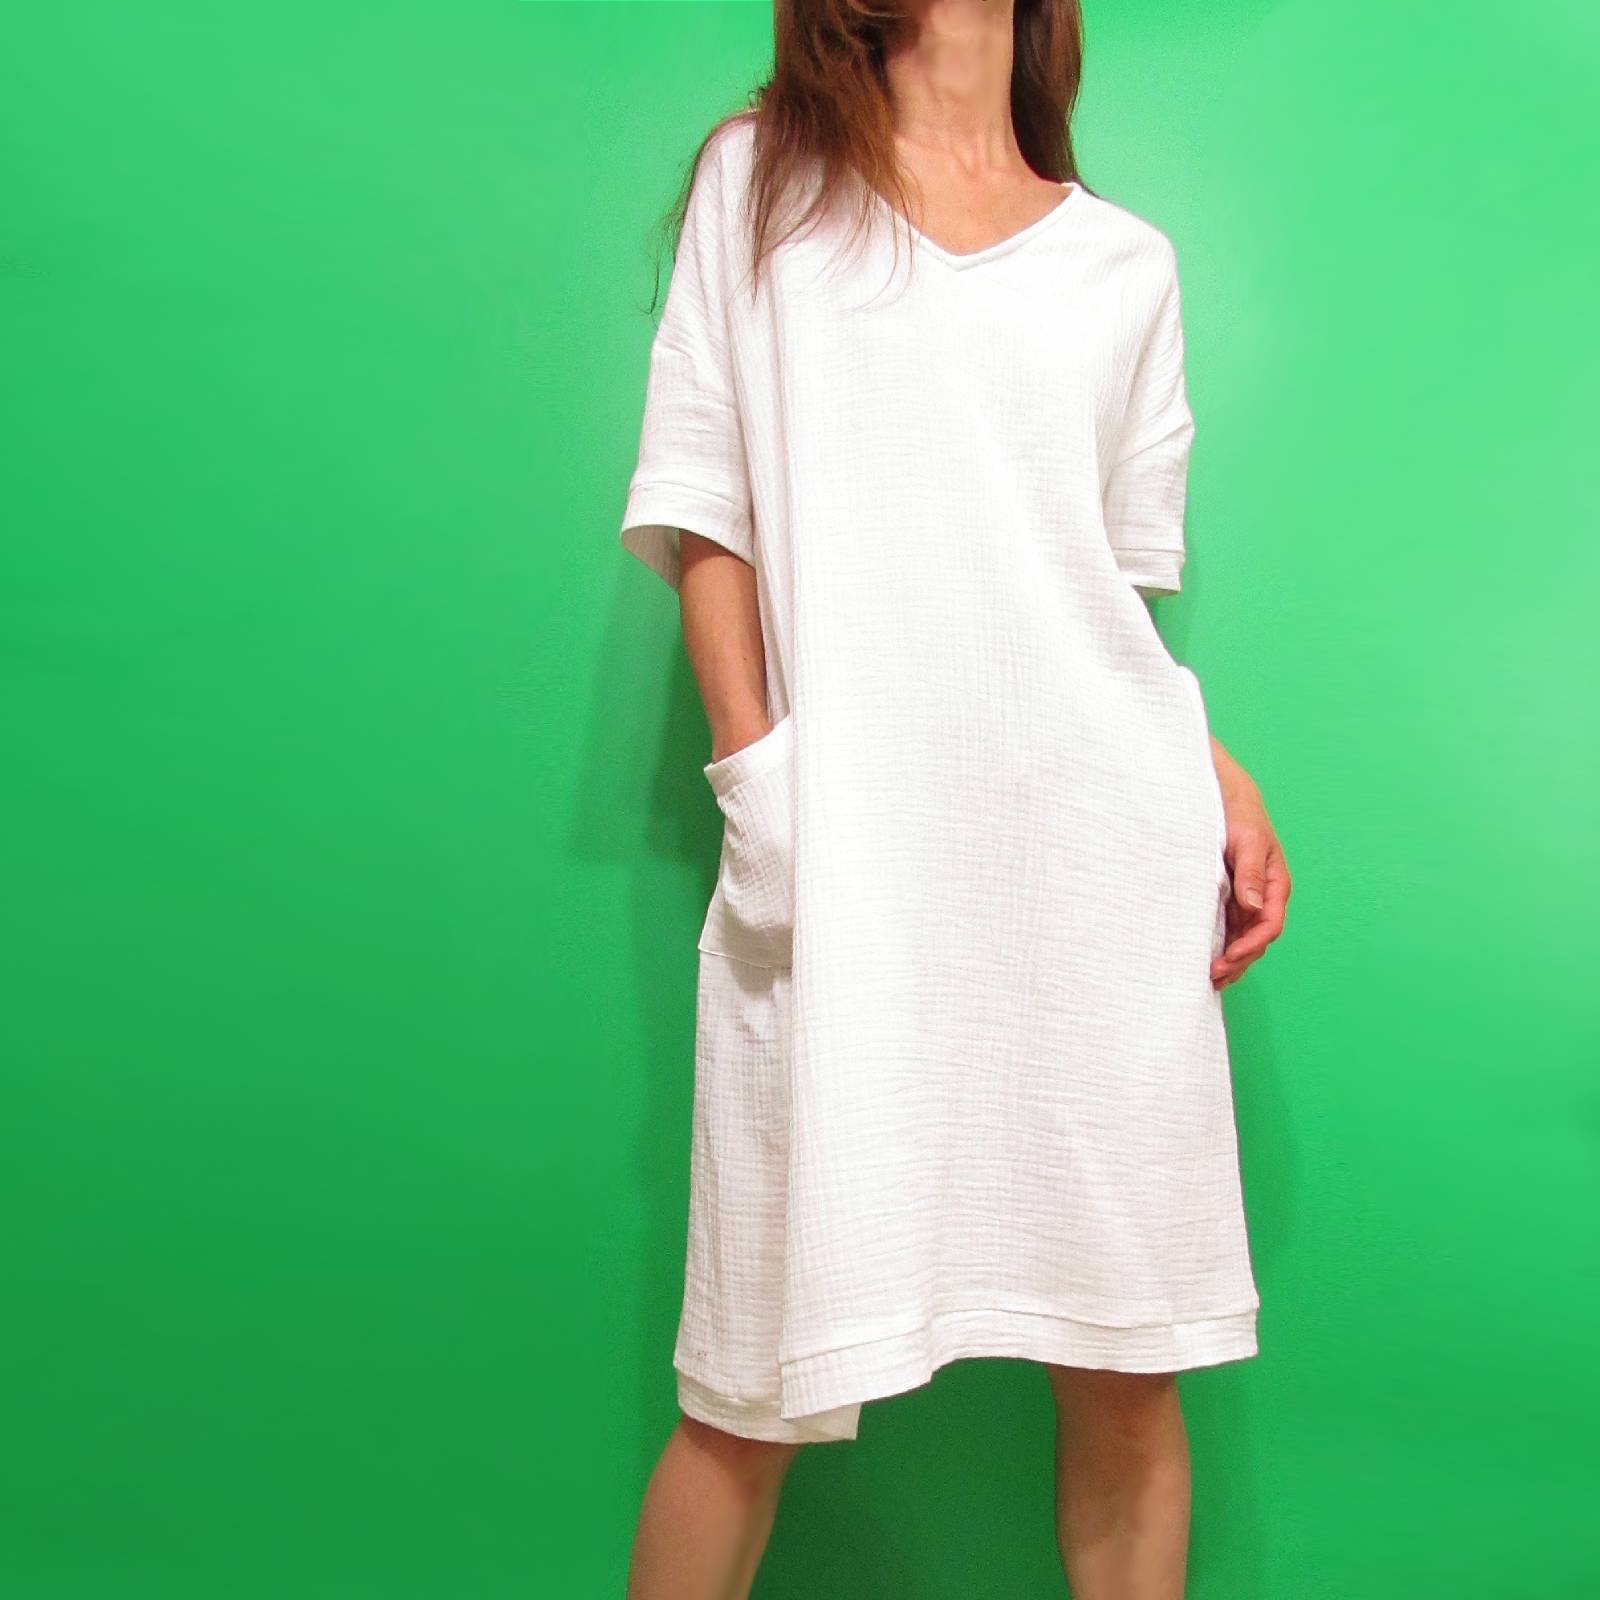 Dress171 V-Neck Cotton Dress with Pocket/Off White